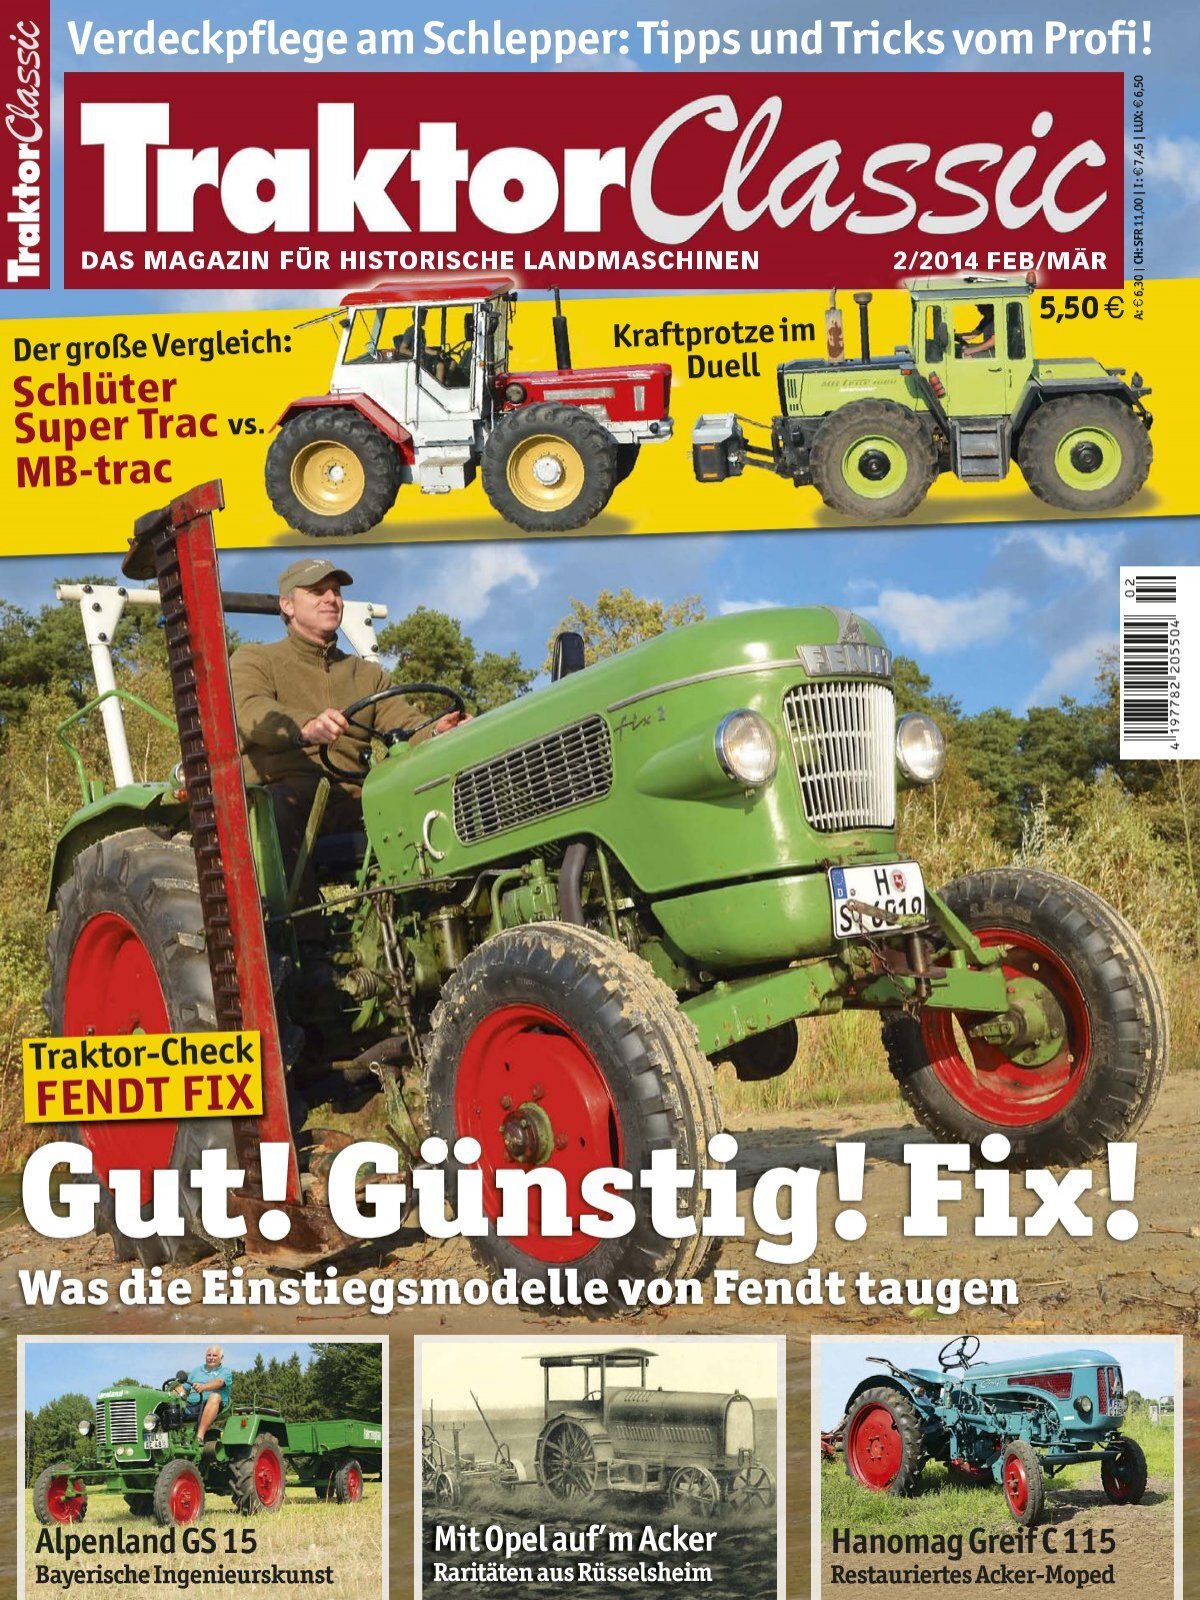 Traktor Classic Traktor-Check Fendt Fix: Gut! Günstig! Fit! (Vorschau)